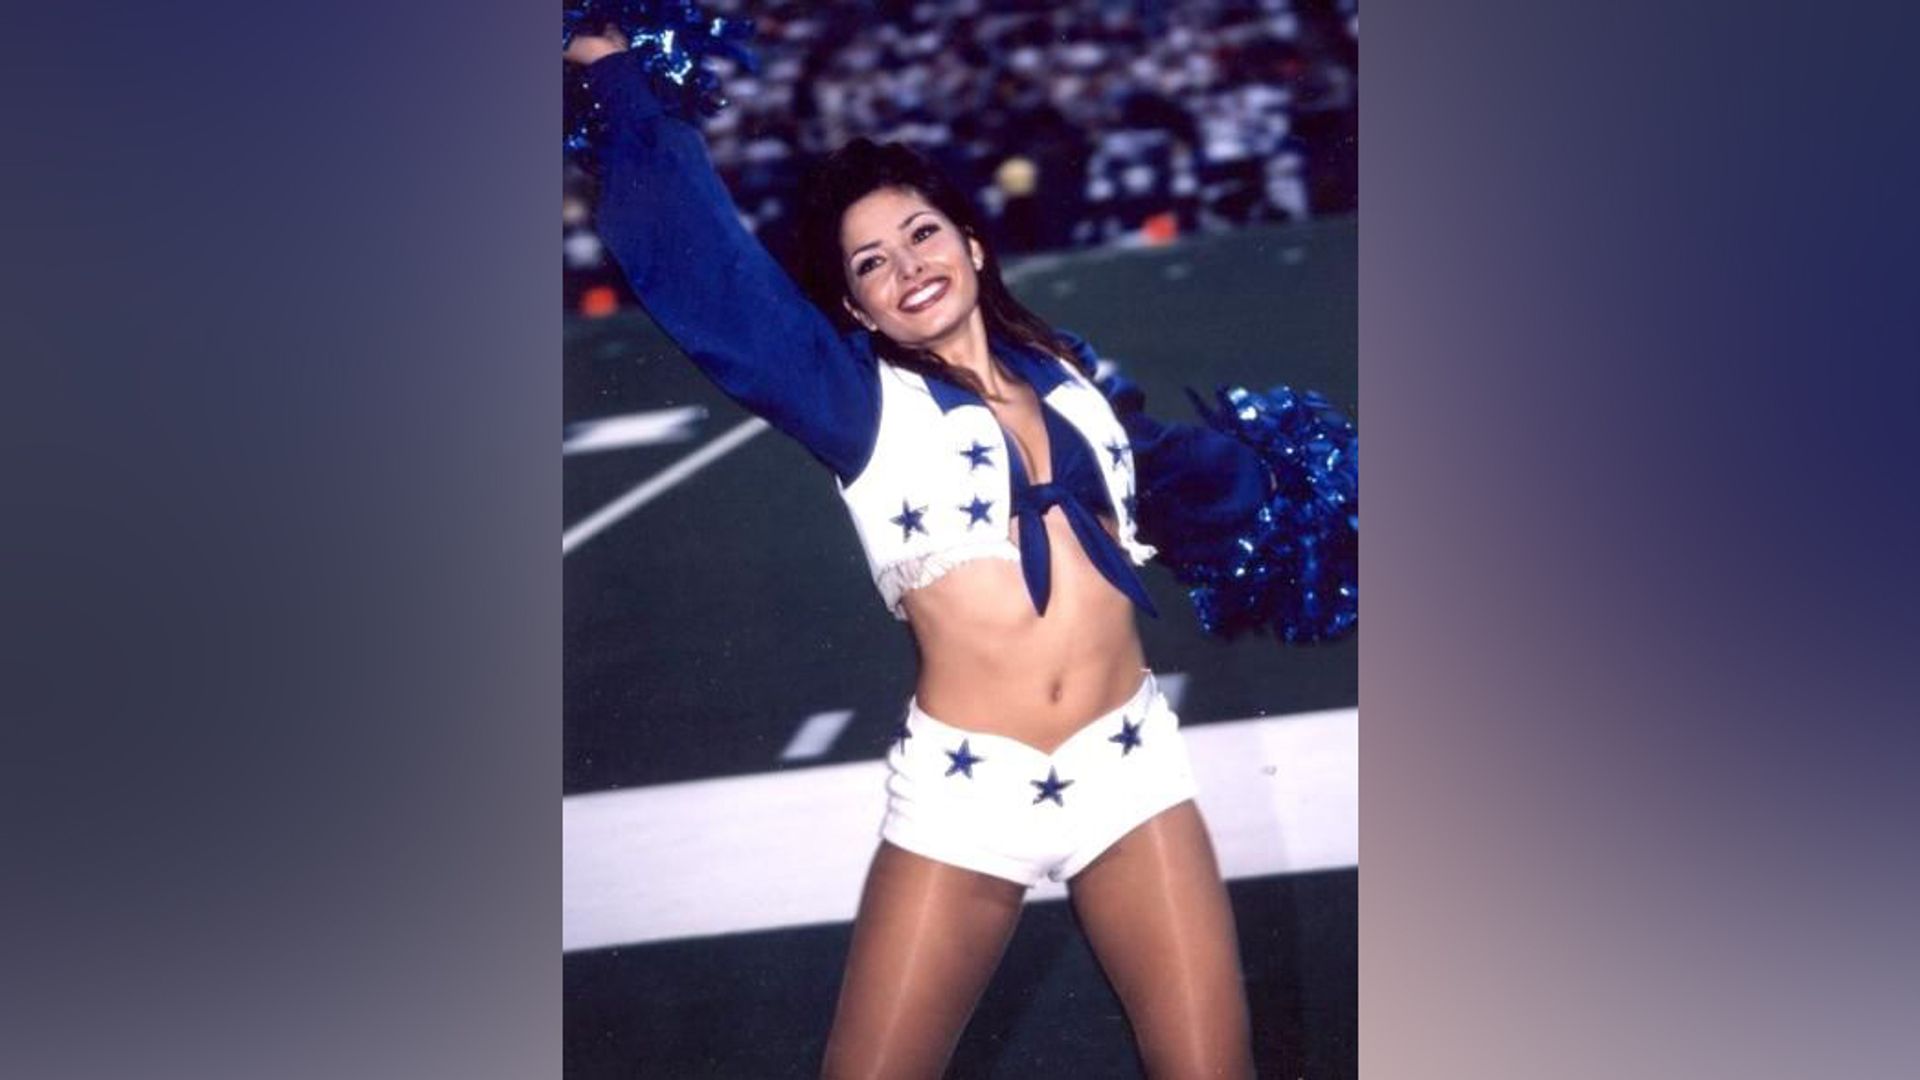 Sarah Shahi was a cheerleader